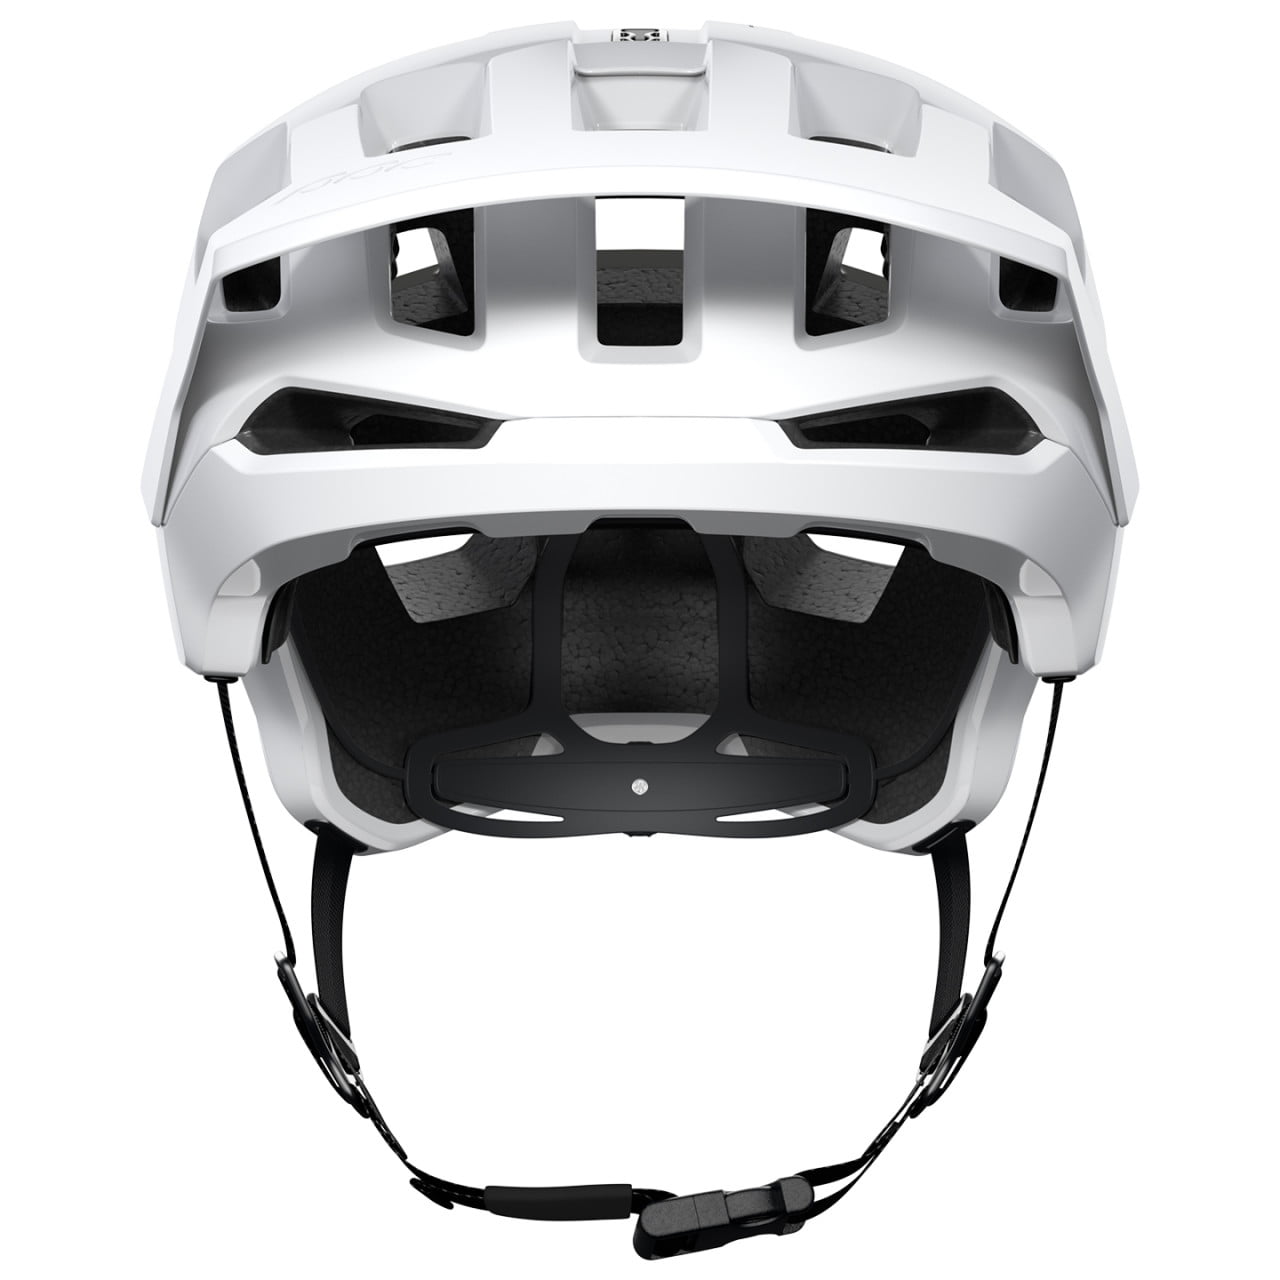 Kortal Race Mips 2024 MTB Helmet